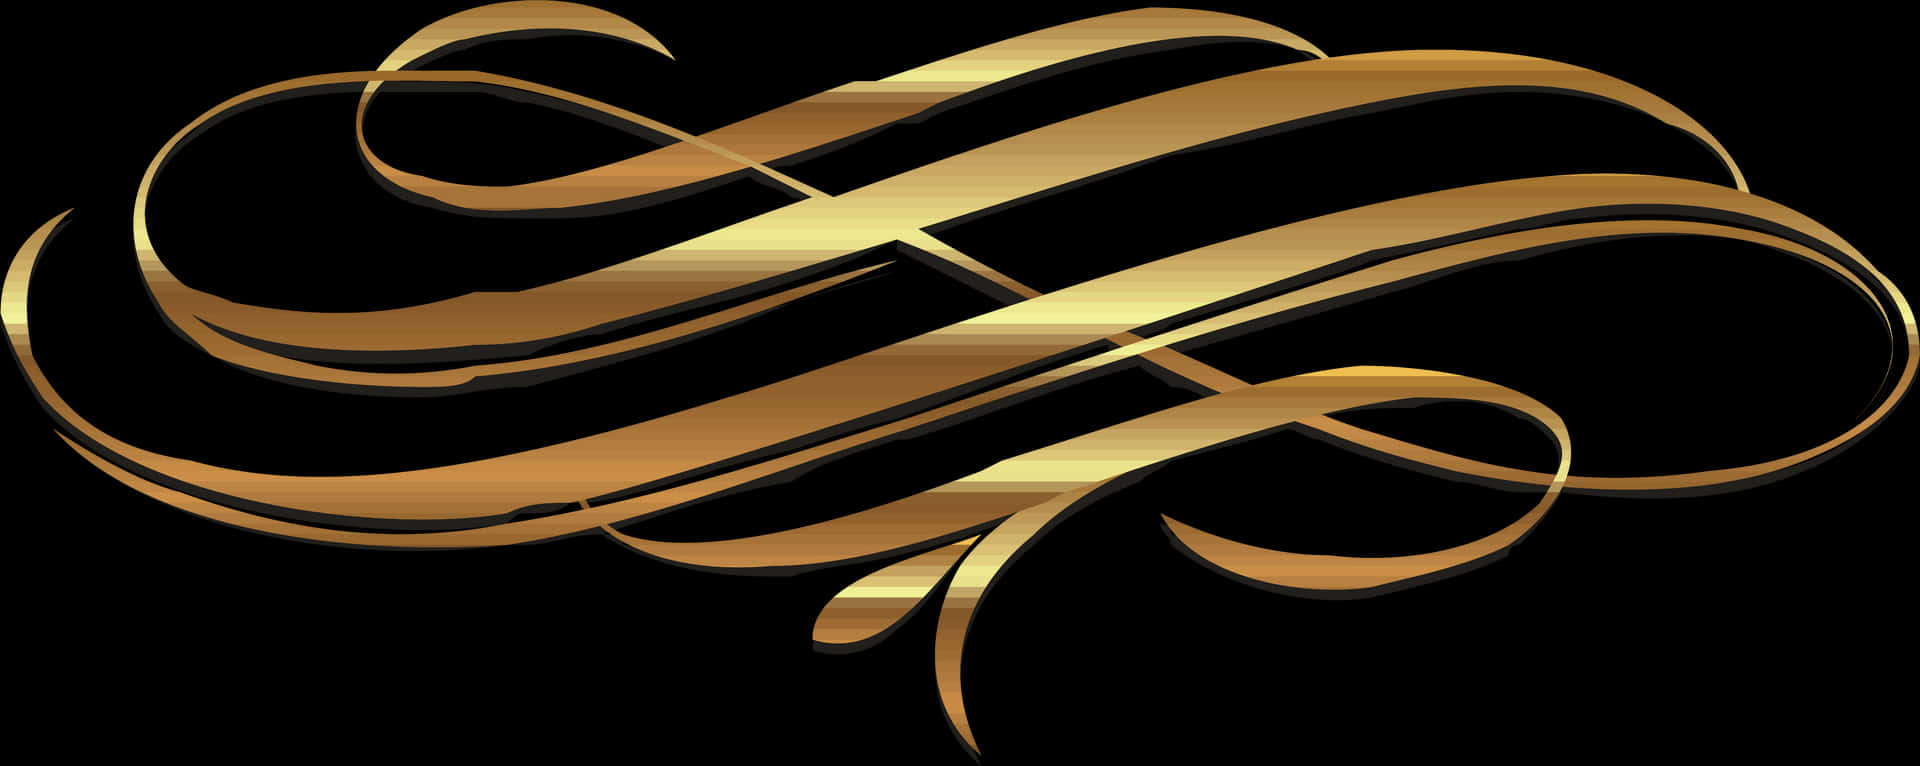 Elegant Golden Ribbon Graphic PNG image